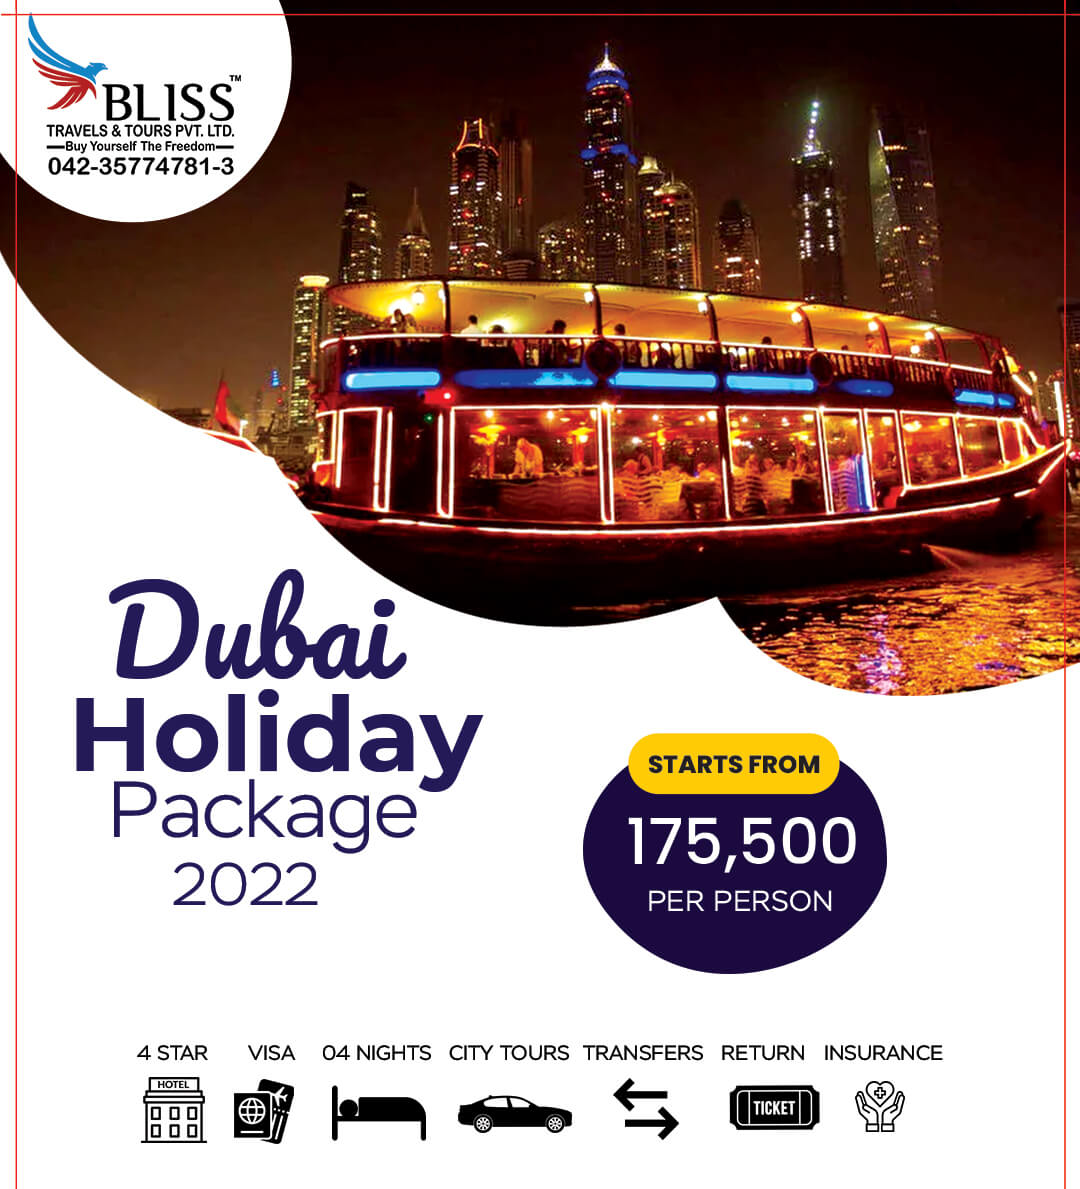 Dubai-Holiday-Package-2022